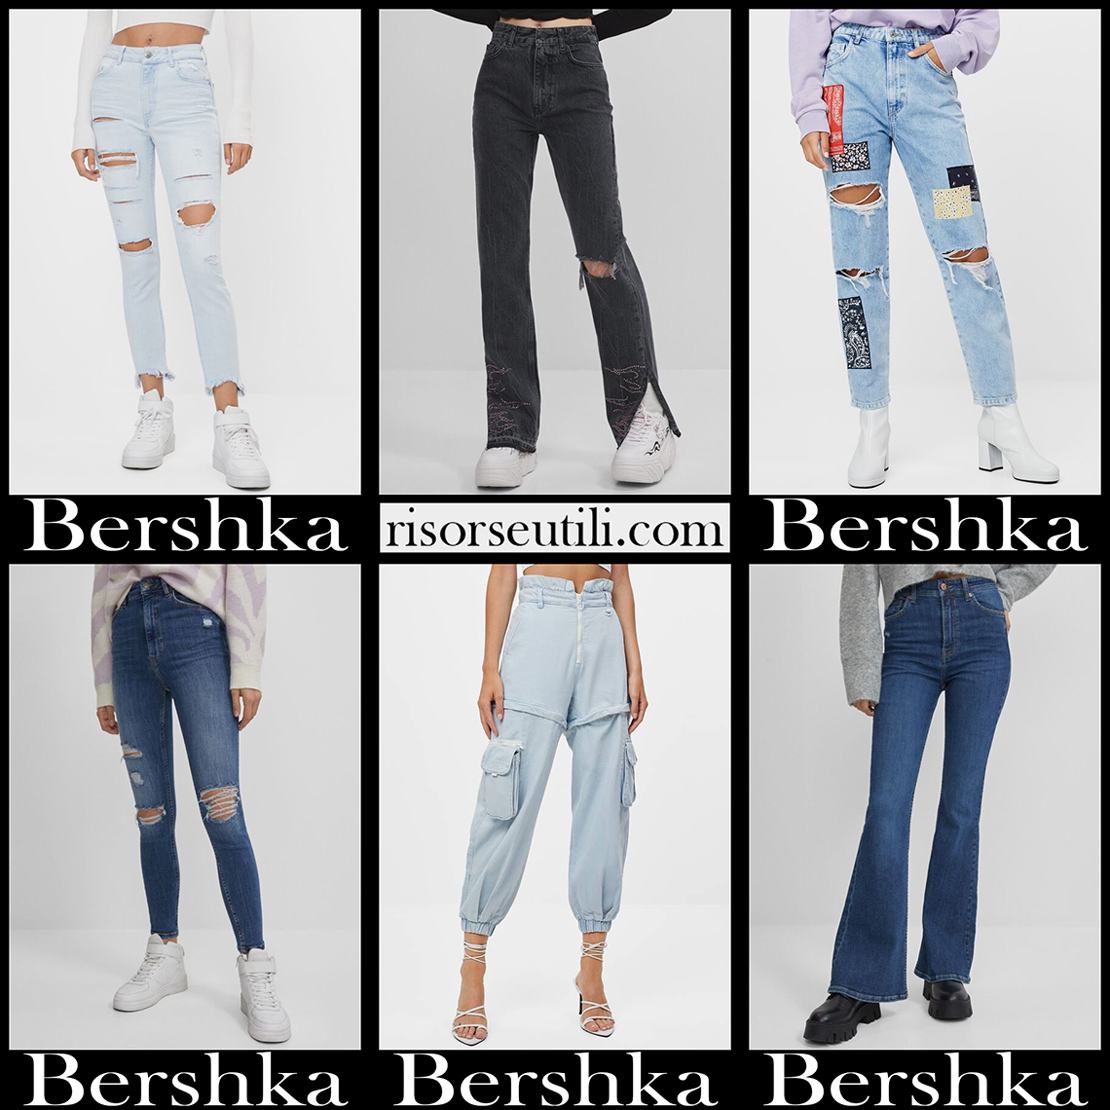 New arrivals Bershka jeans 2021 womens clothing denim